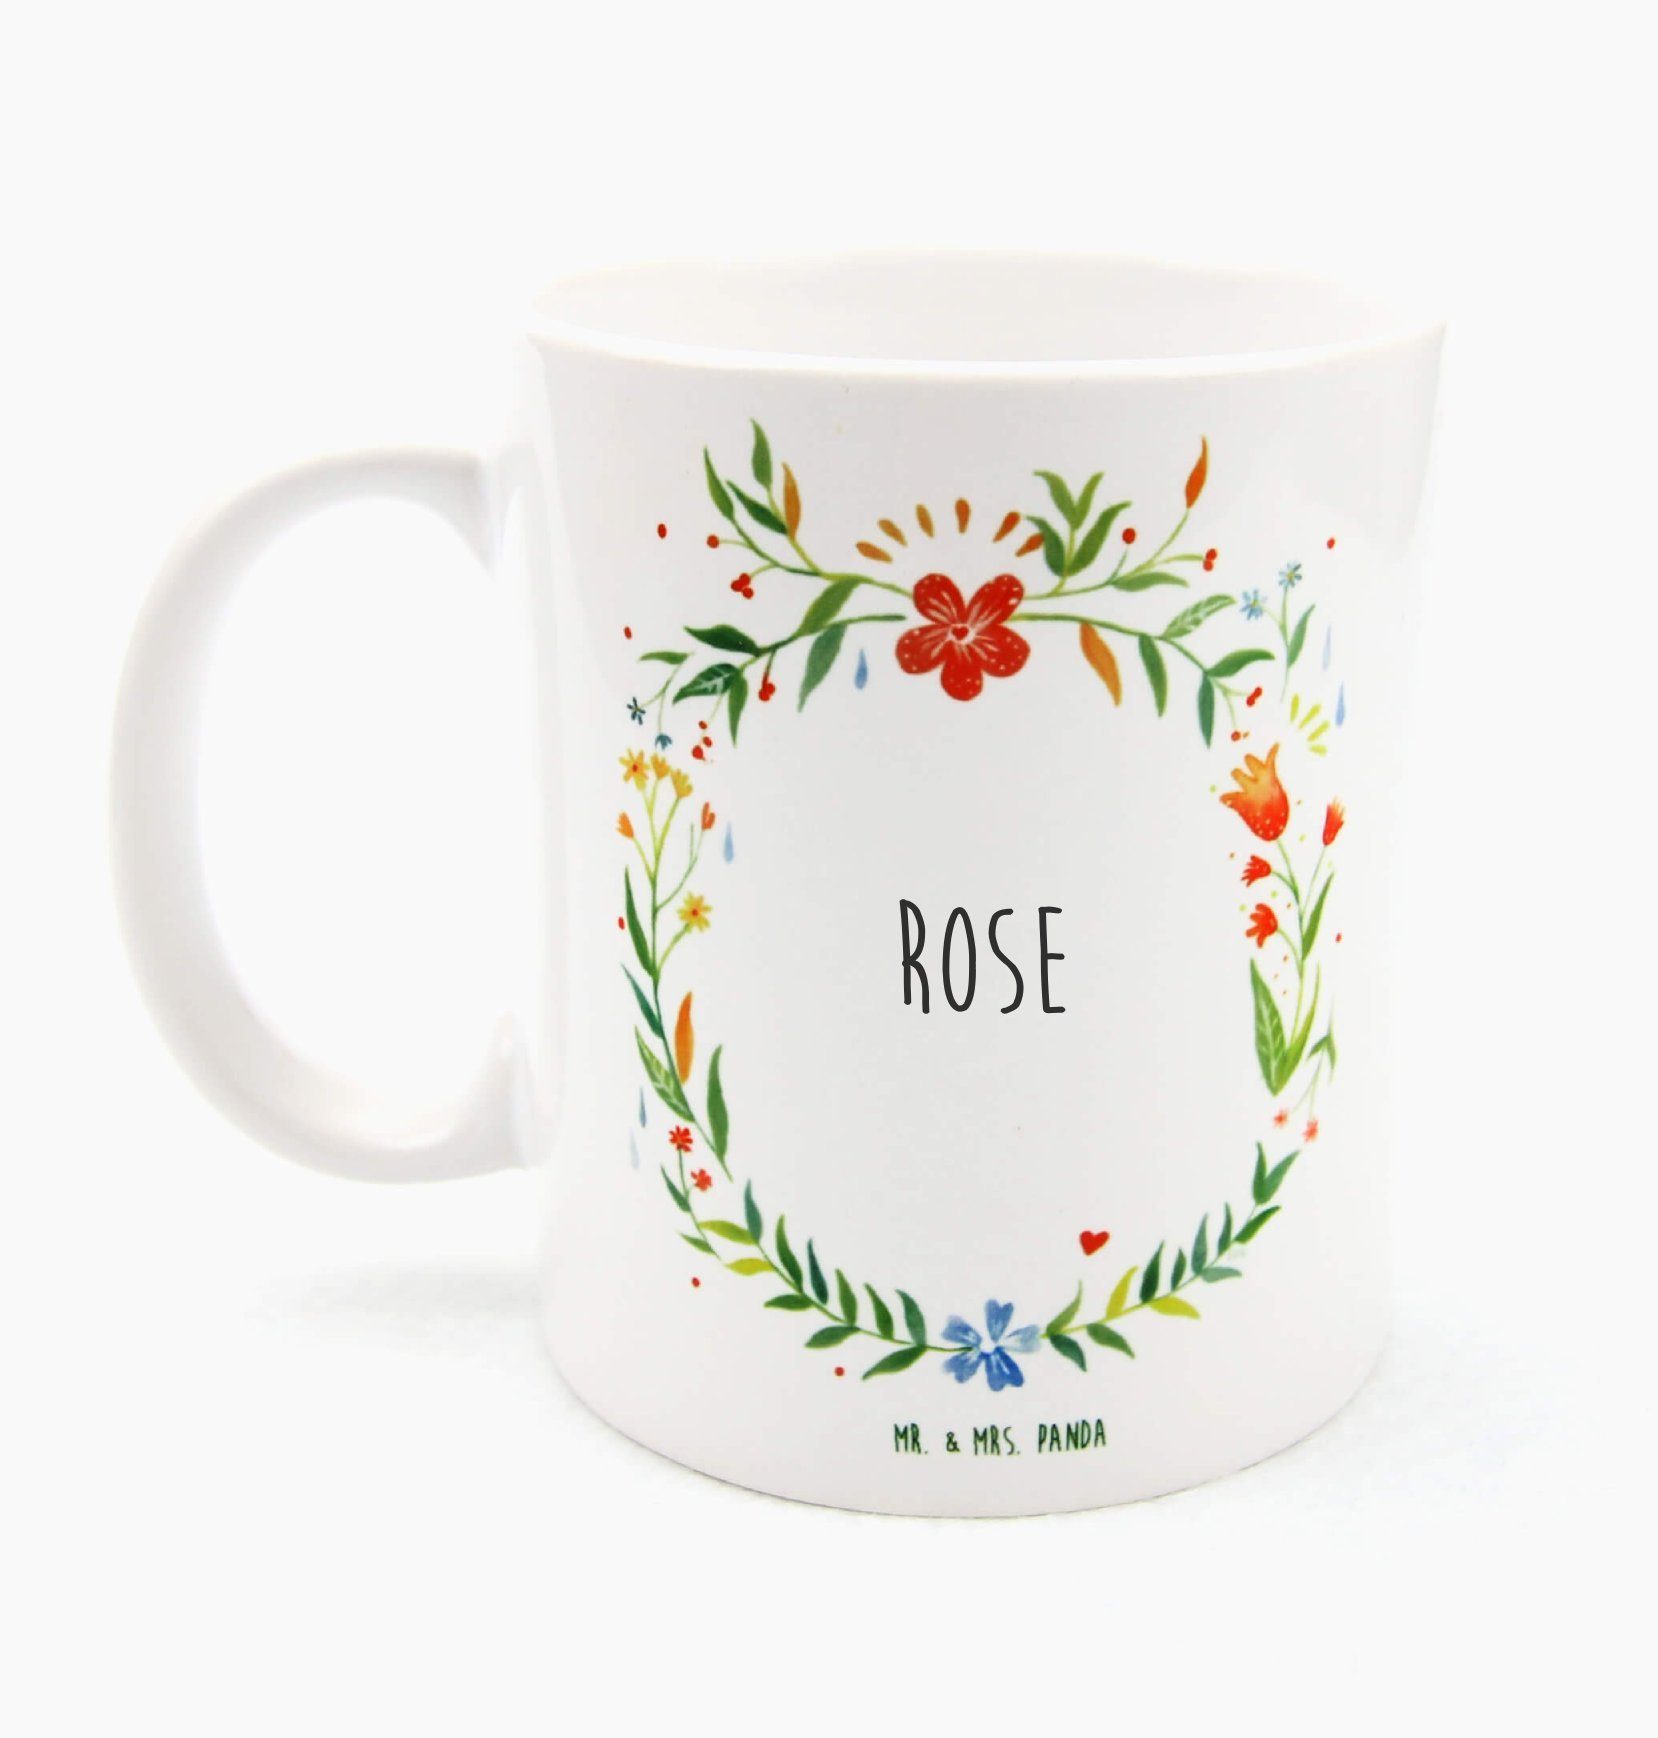 Mr. & Mrs. Panda Tasse Rose - Geschenk, Tasse Sprüche, Tasse Motive, Porzellantasse, Tasse, Keramik